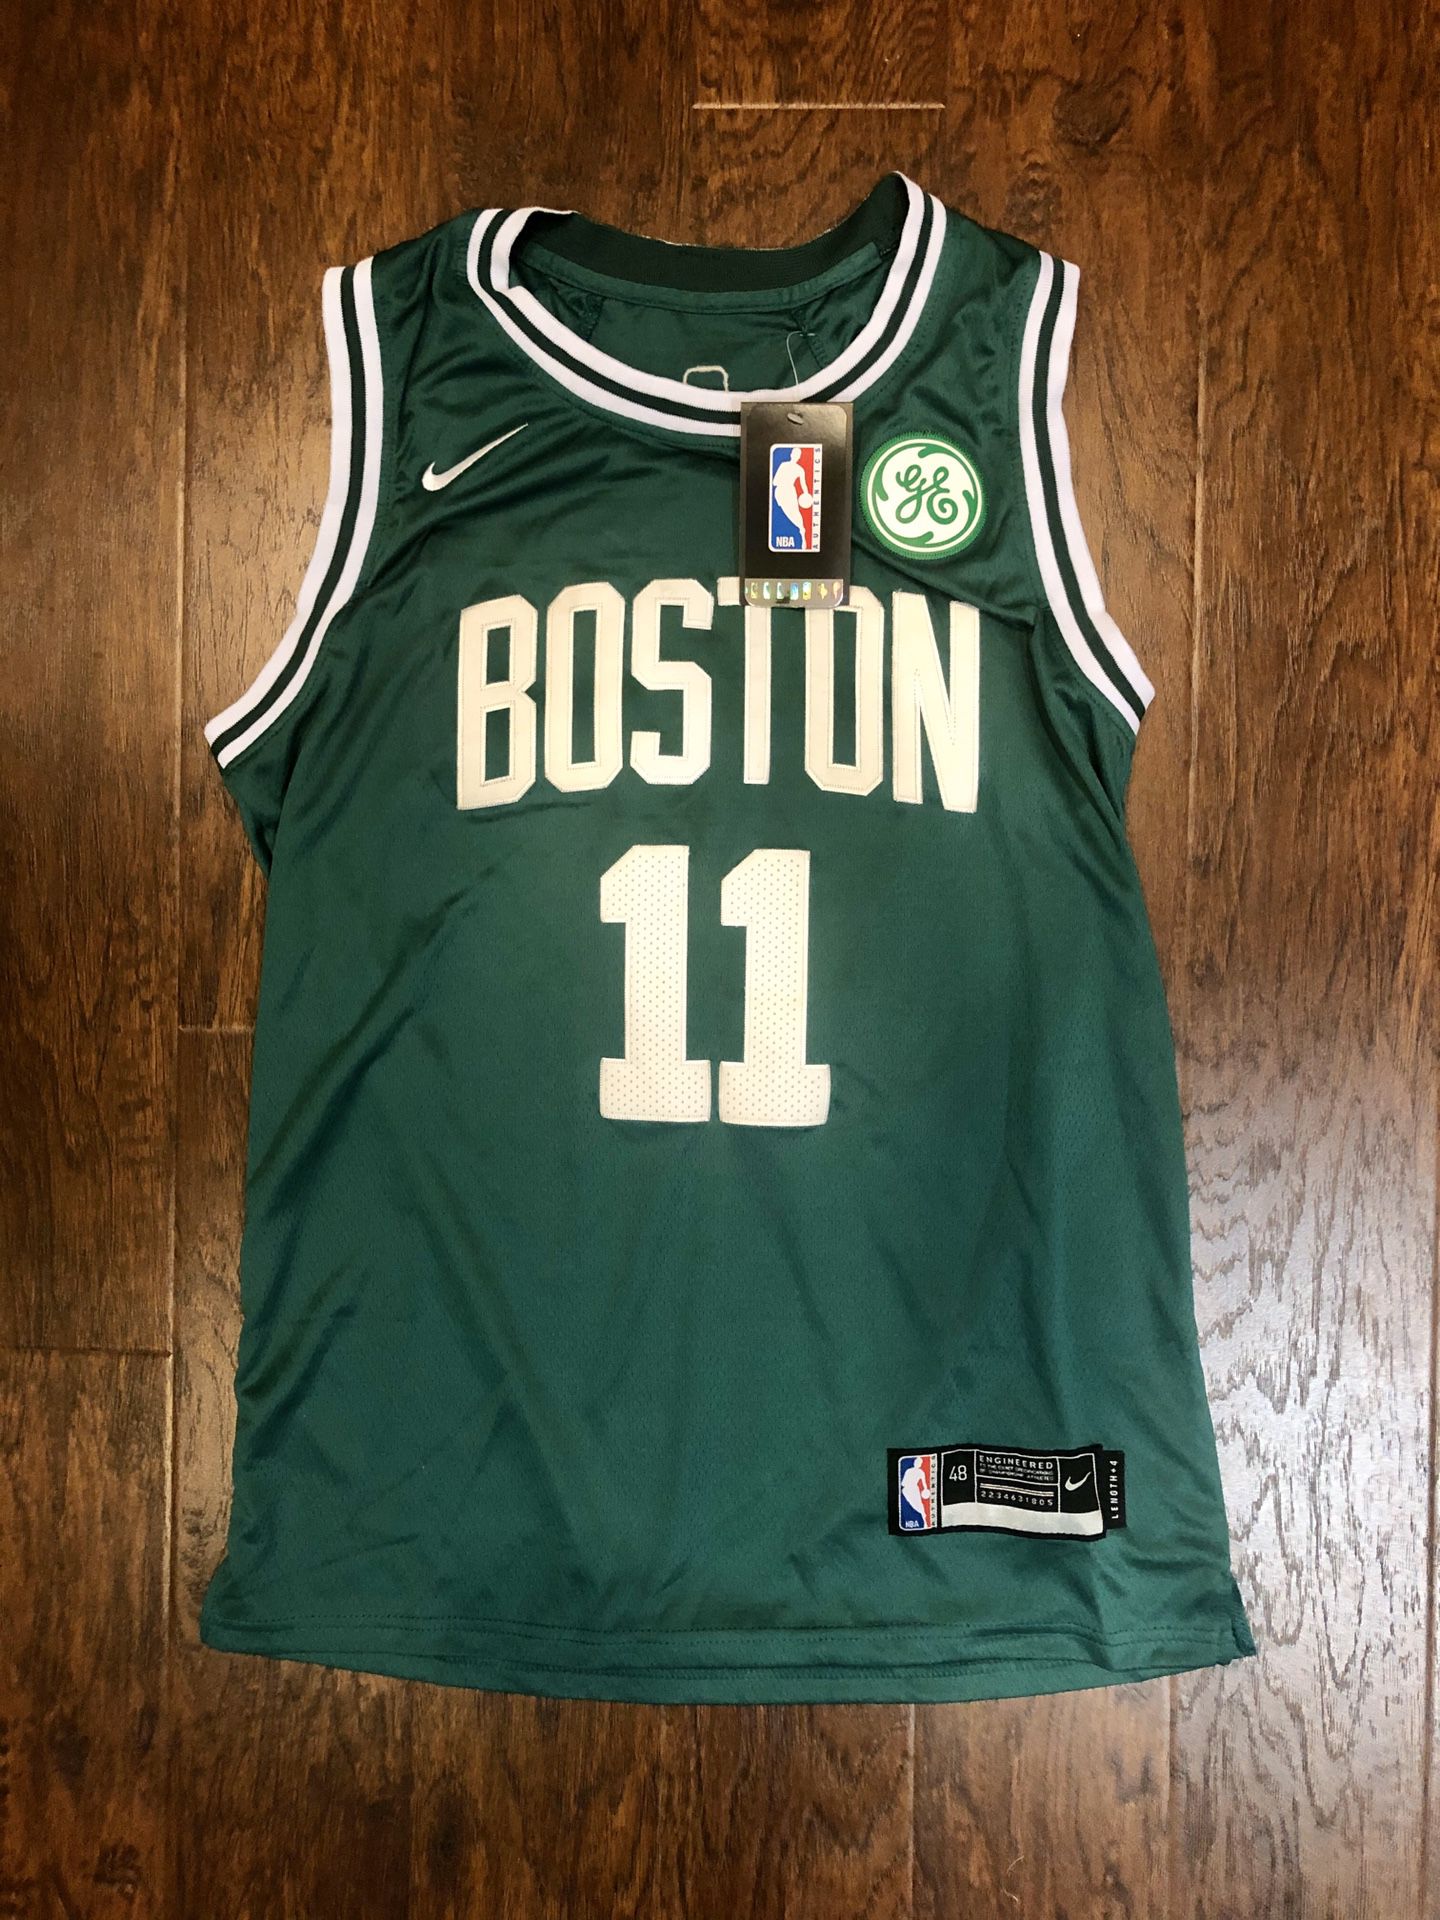 Brand New Boston Celtics Kyrie Irving #11 Nike Jersey - Size 48 (Medium)